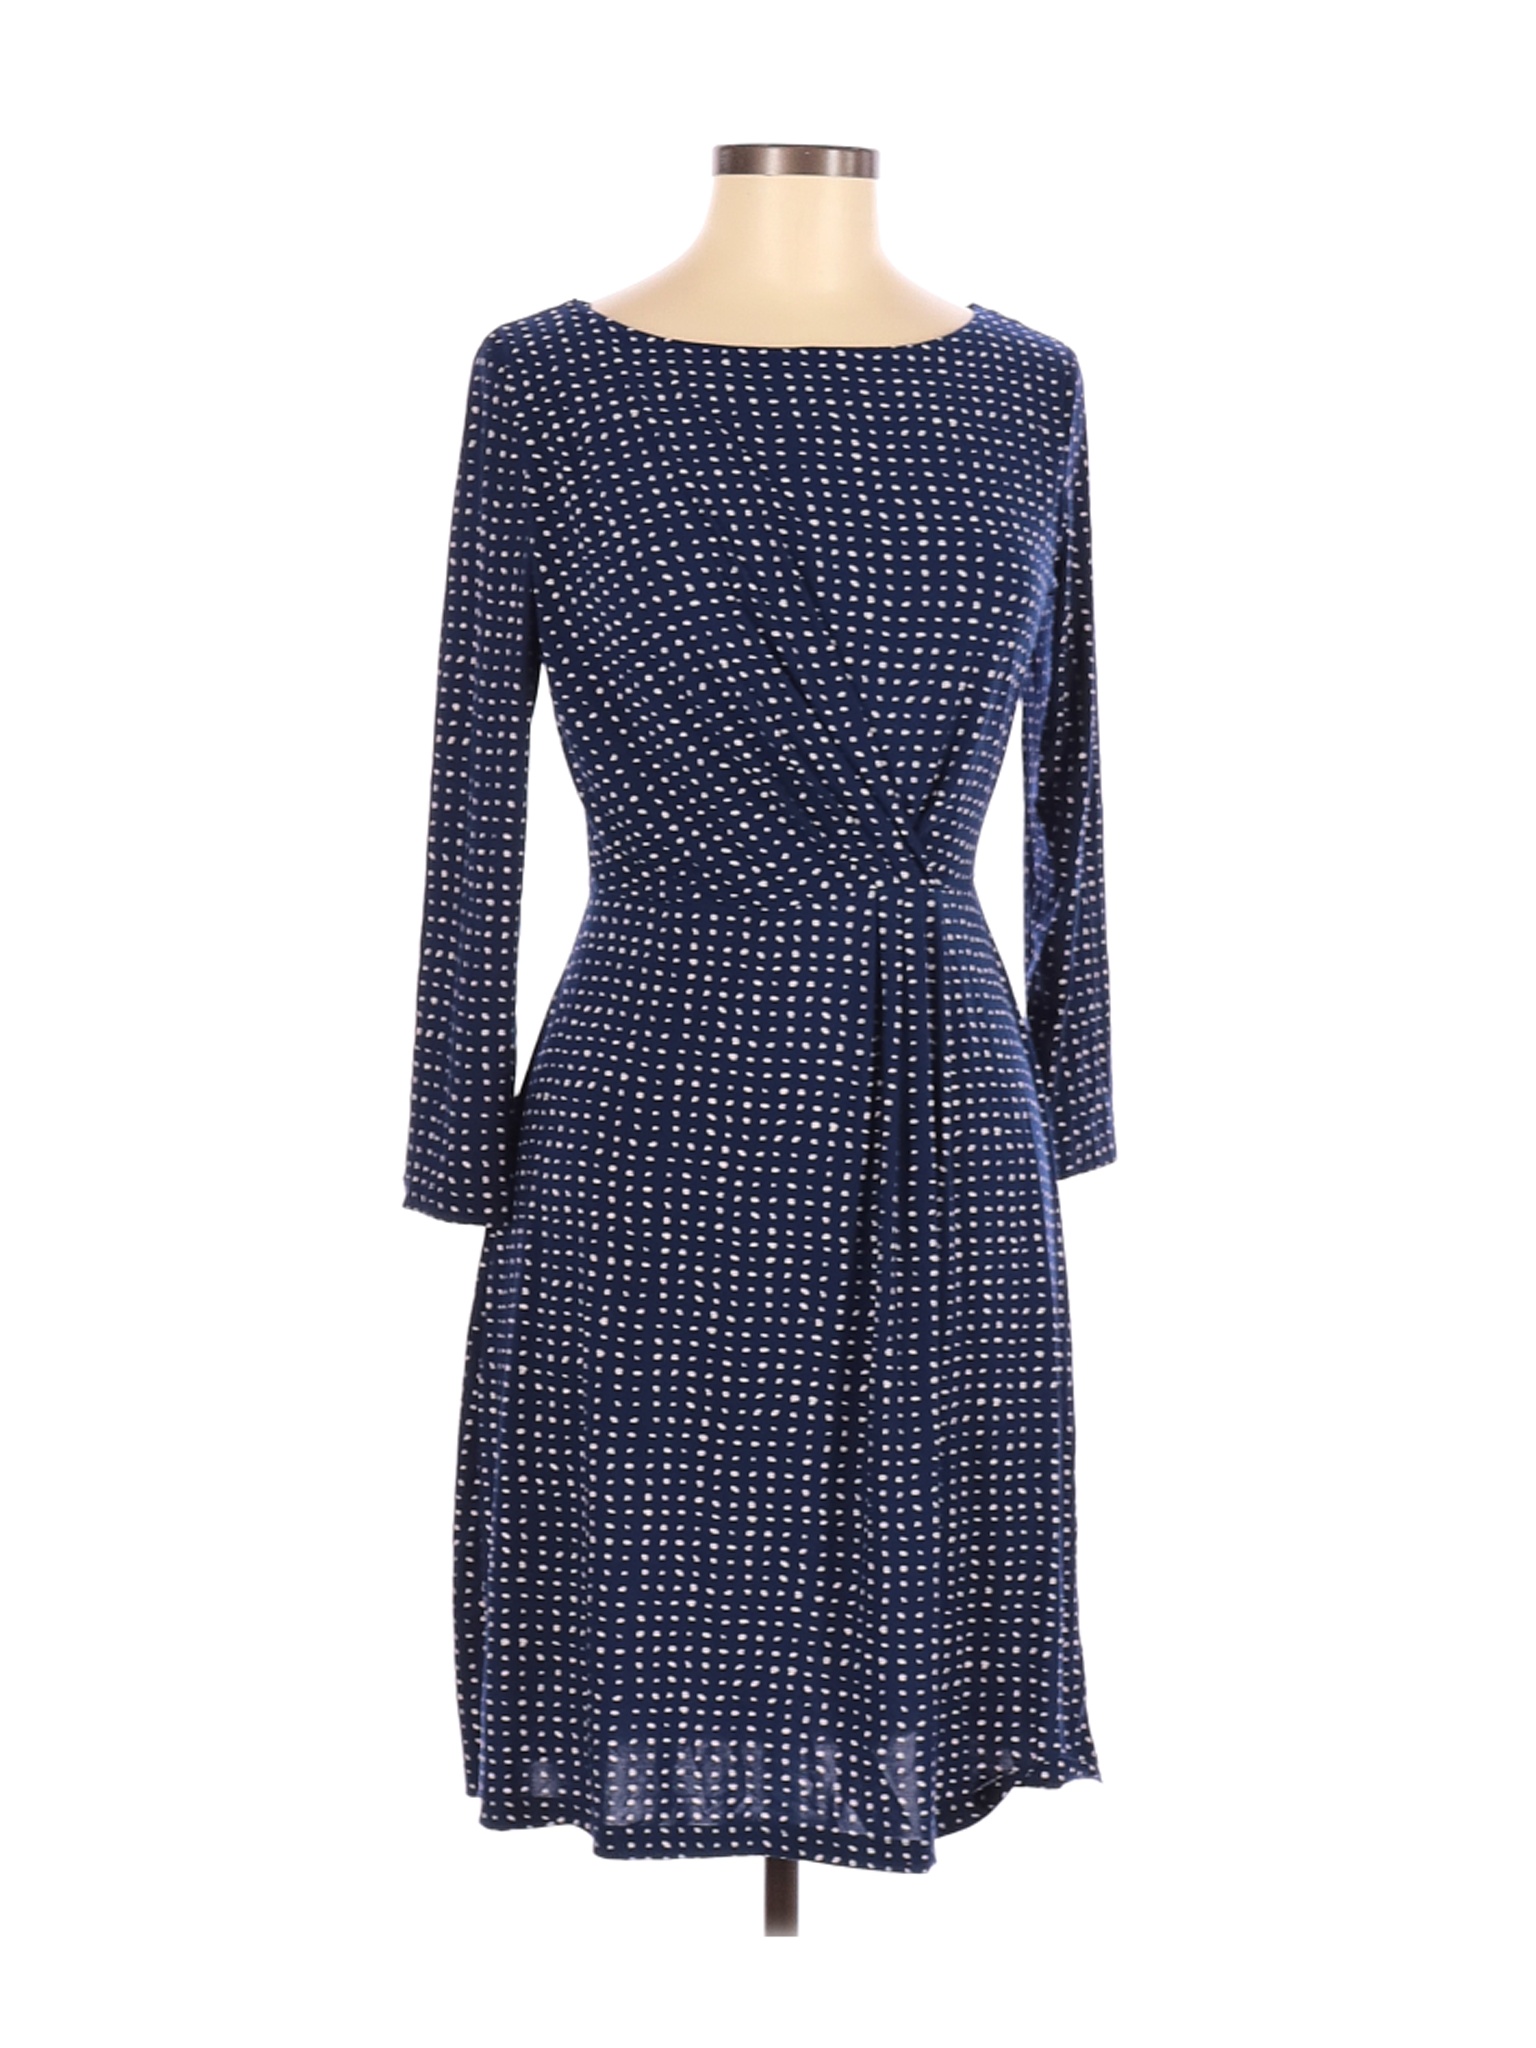 NWT Le Lis Women Blue Casual Dress M | eBay